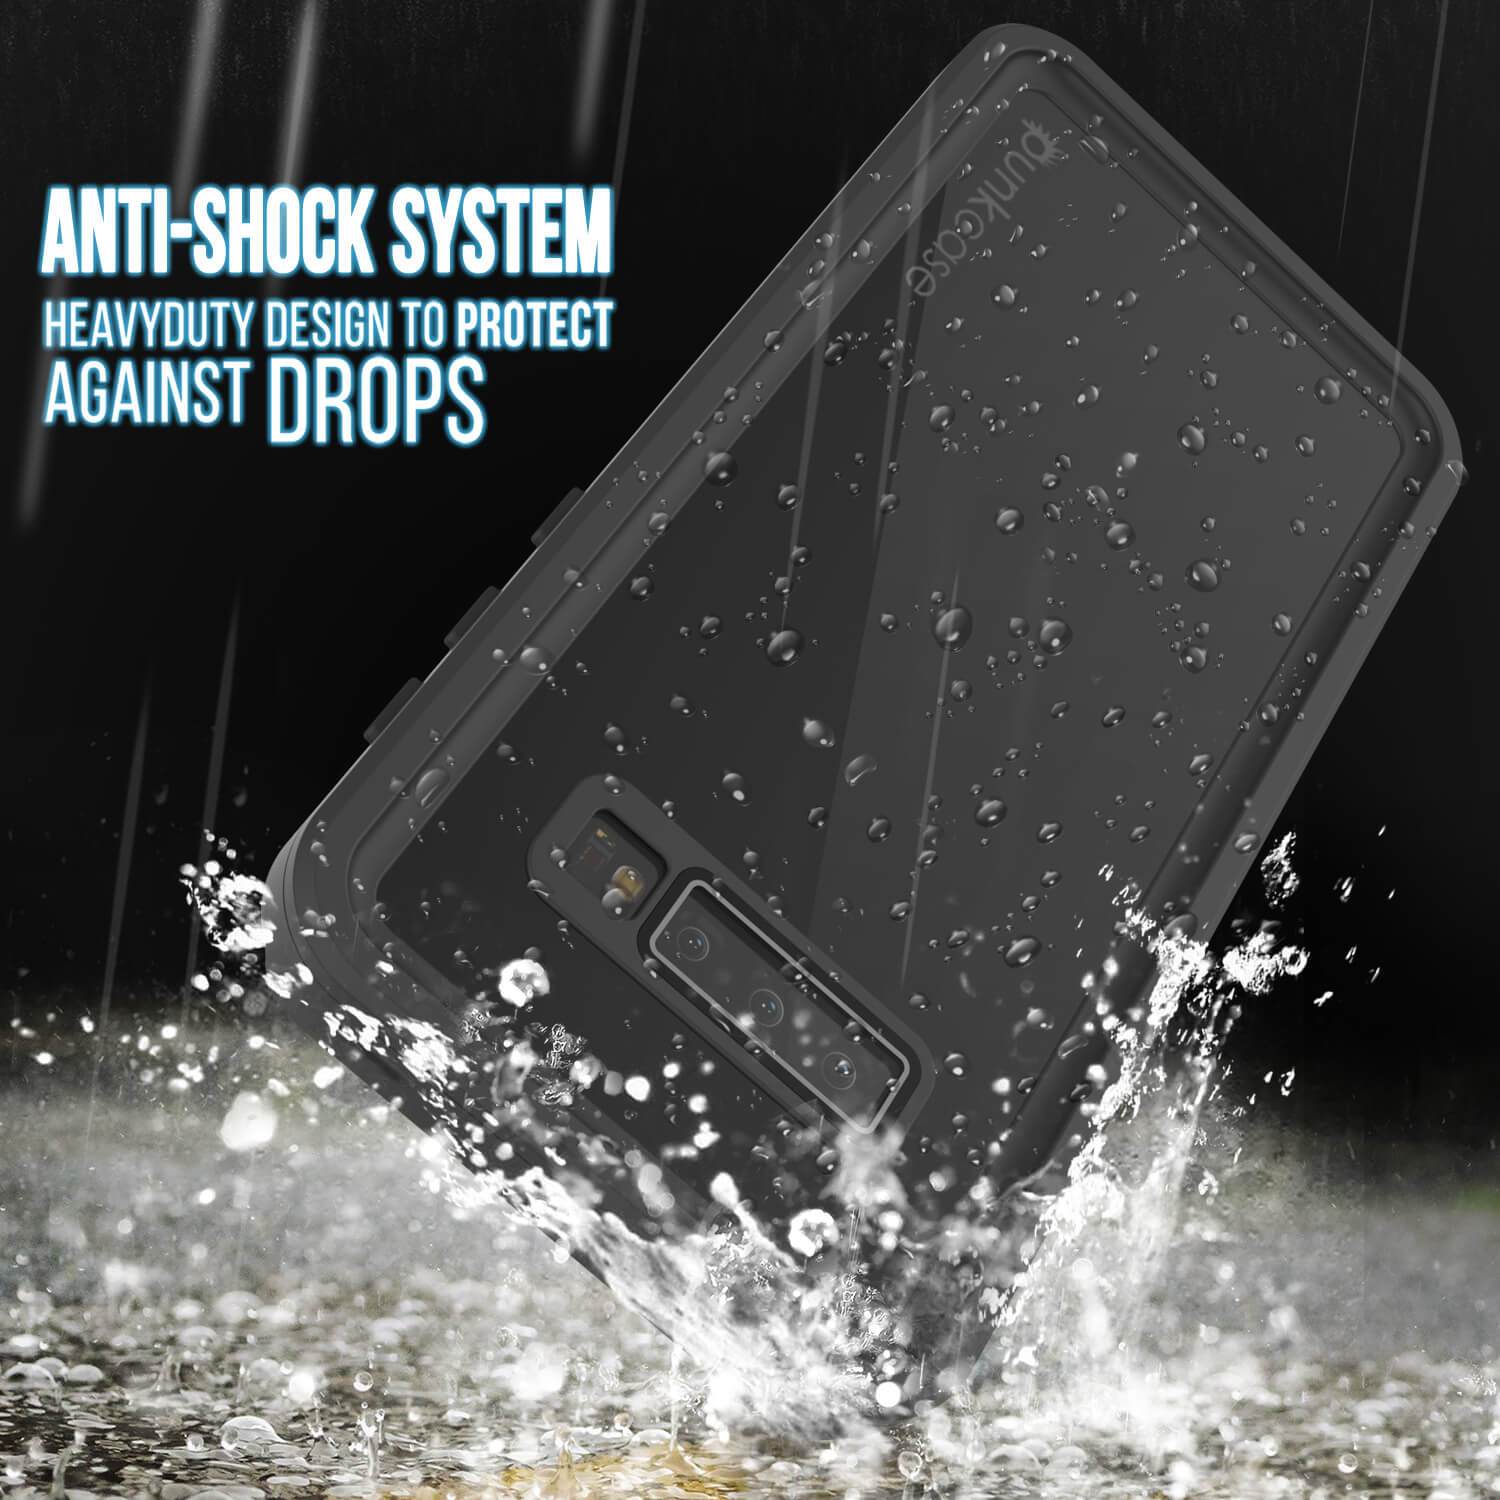 Galaxy S10+ Plus Waterproof Case PunkCase StudStar Black Thin 6.6ft Underwater IP68 Shock/Snow Proof